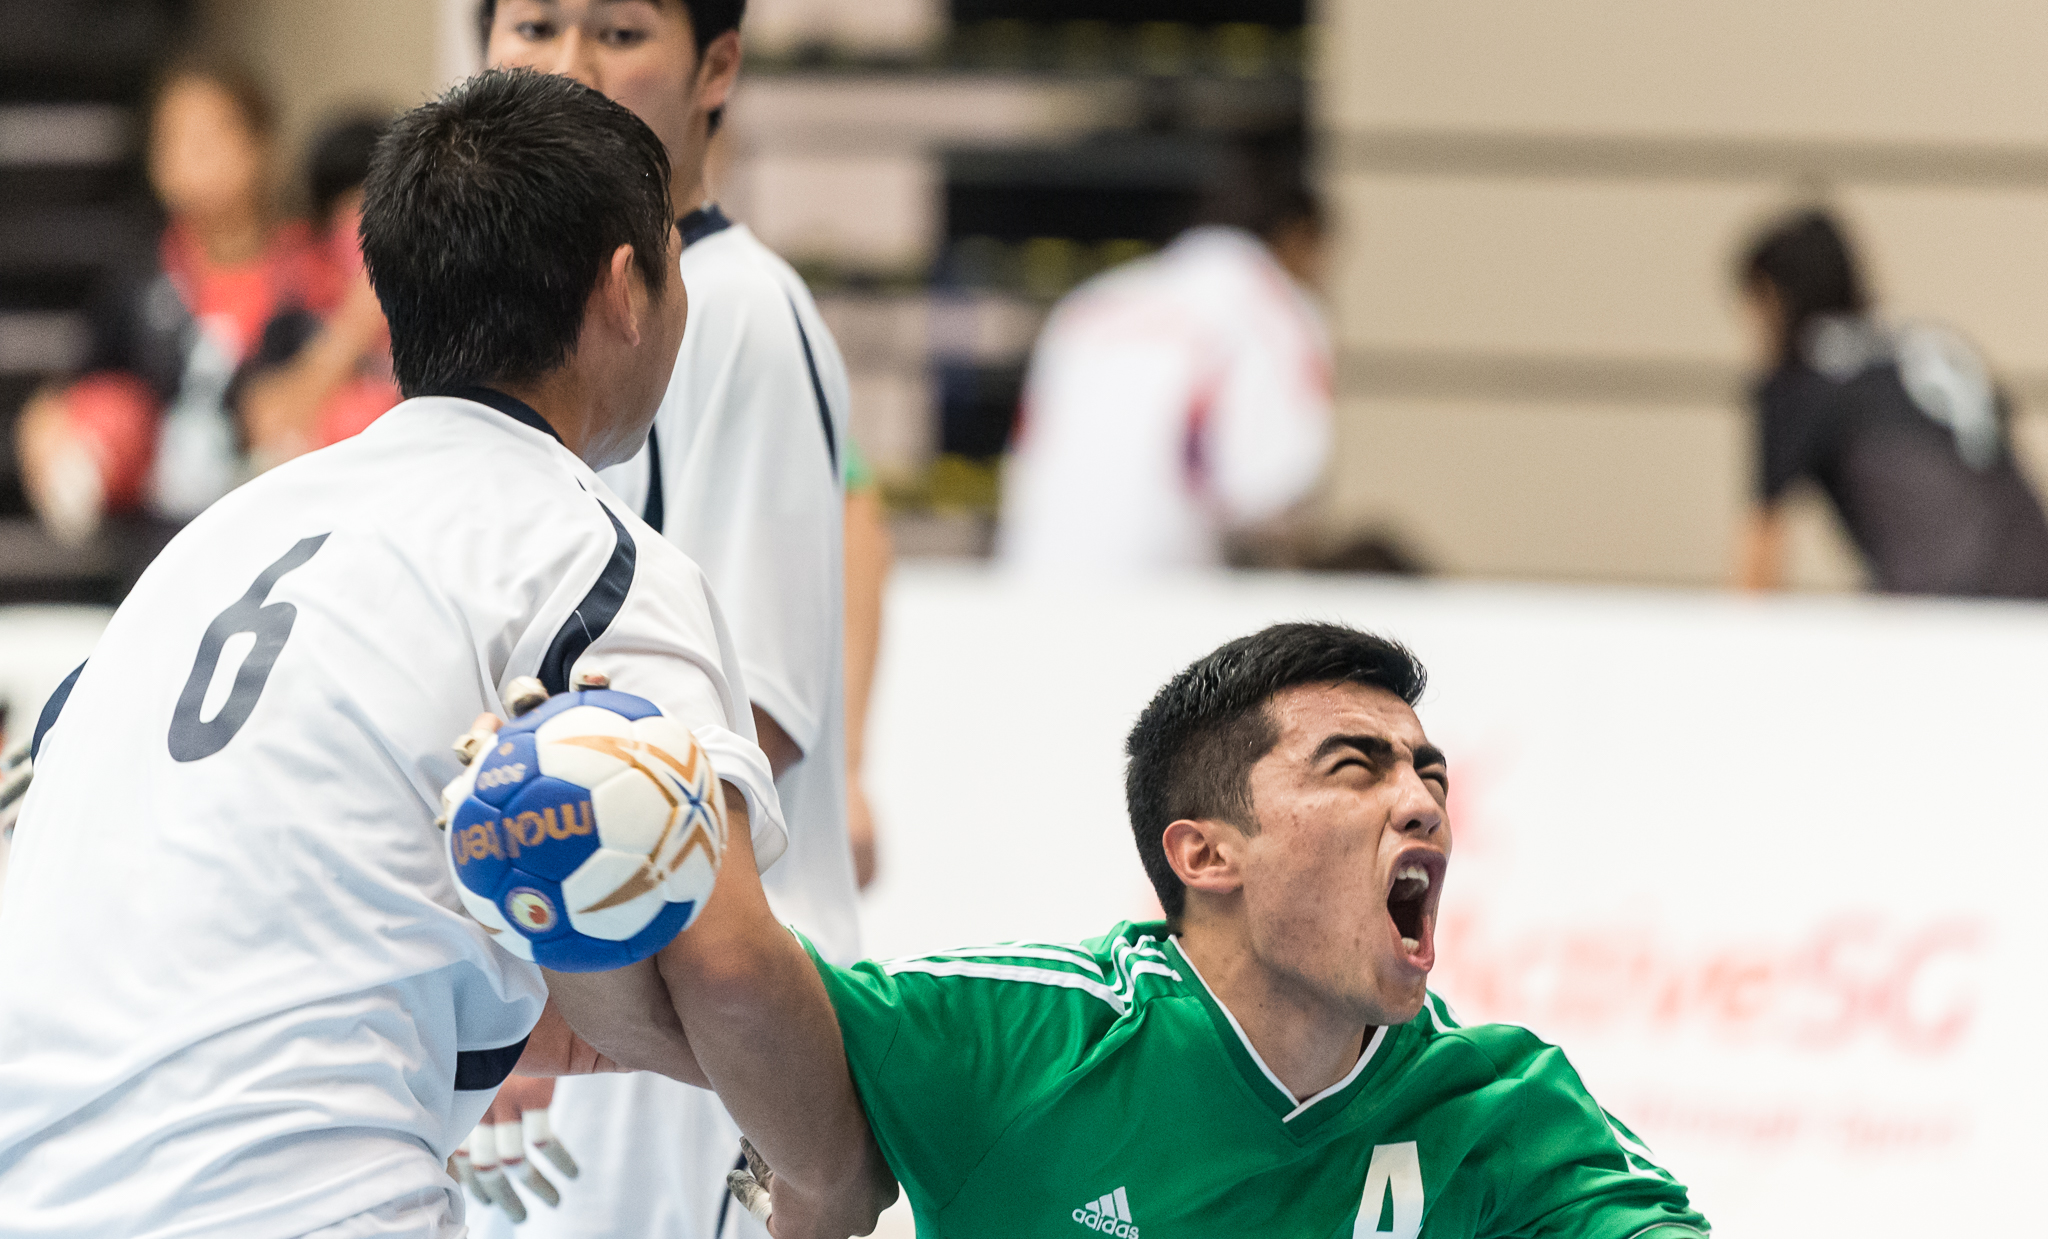 A Japanese player grabs an Uzbek player's arm during an International hand ball match at Our Tampines Hub.